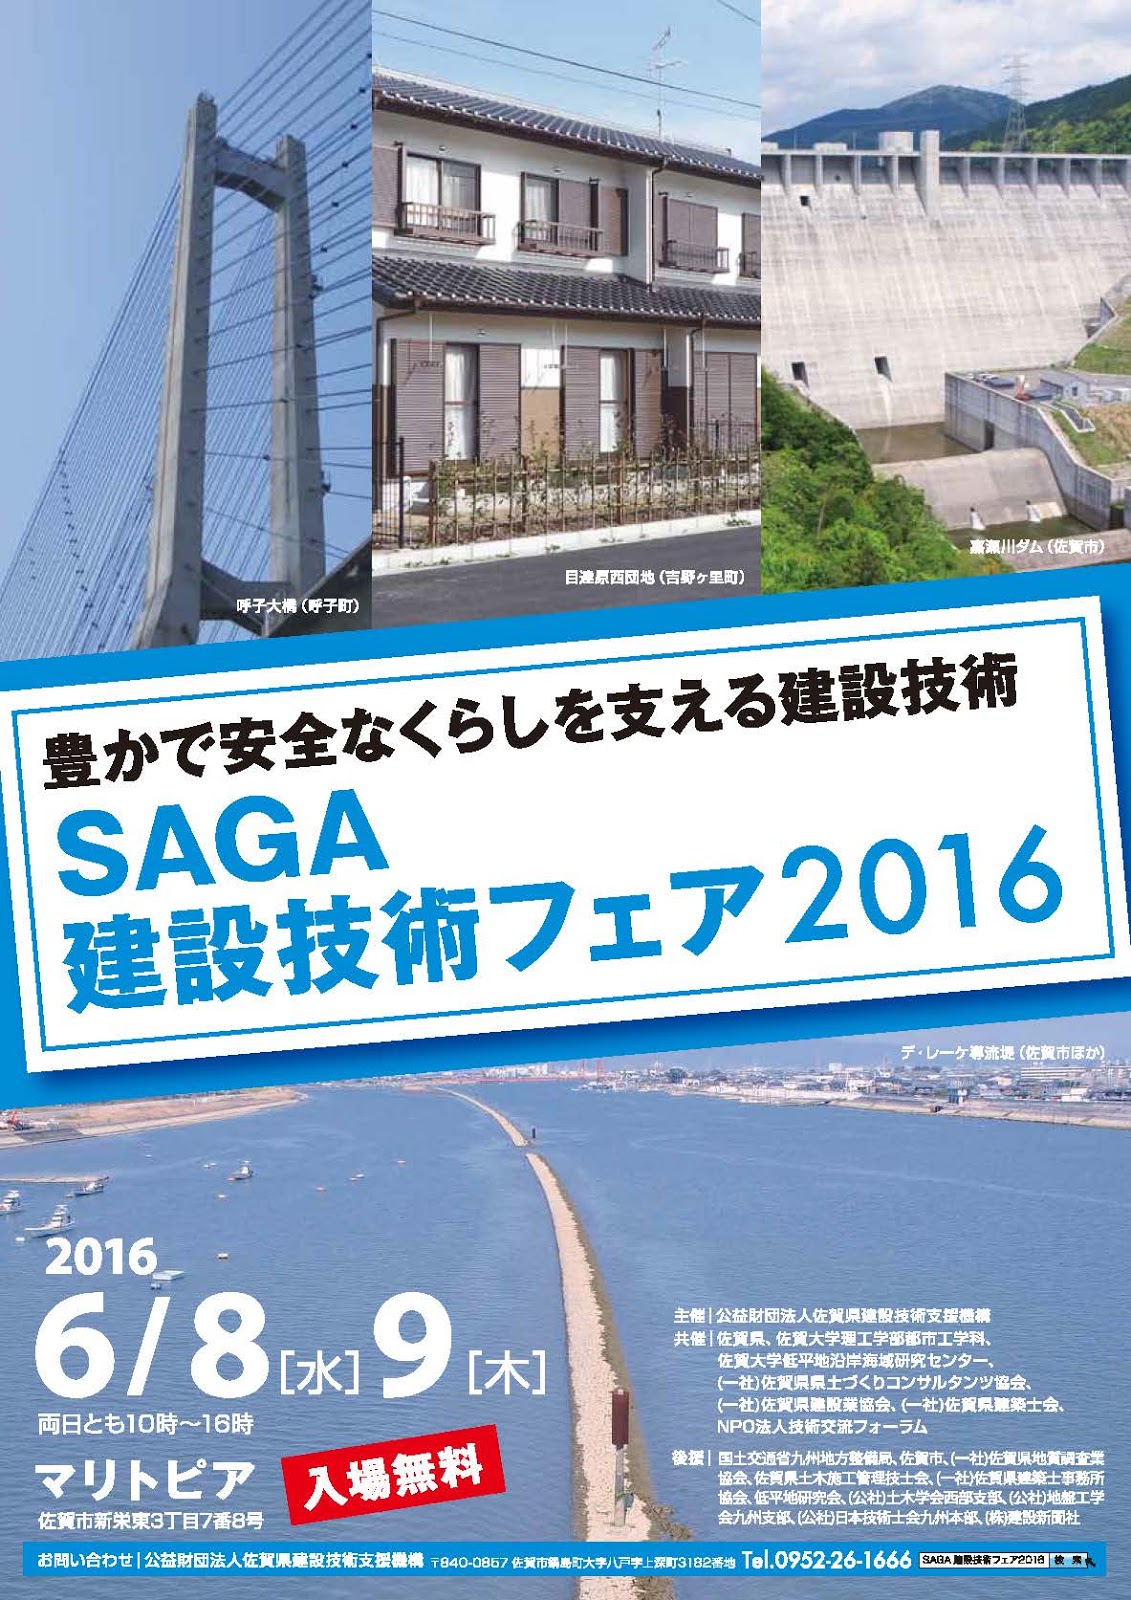 「SAGA建設技術フェア2016」